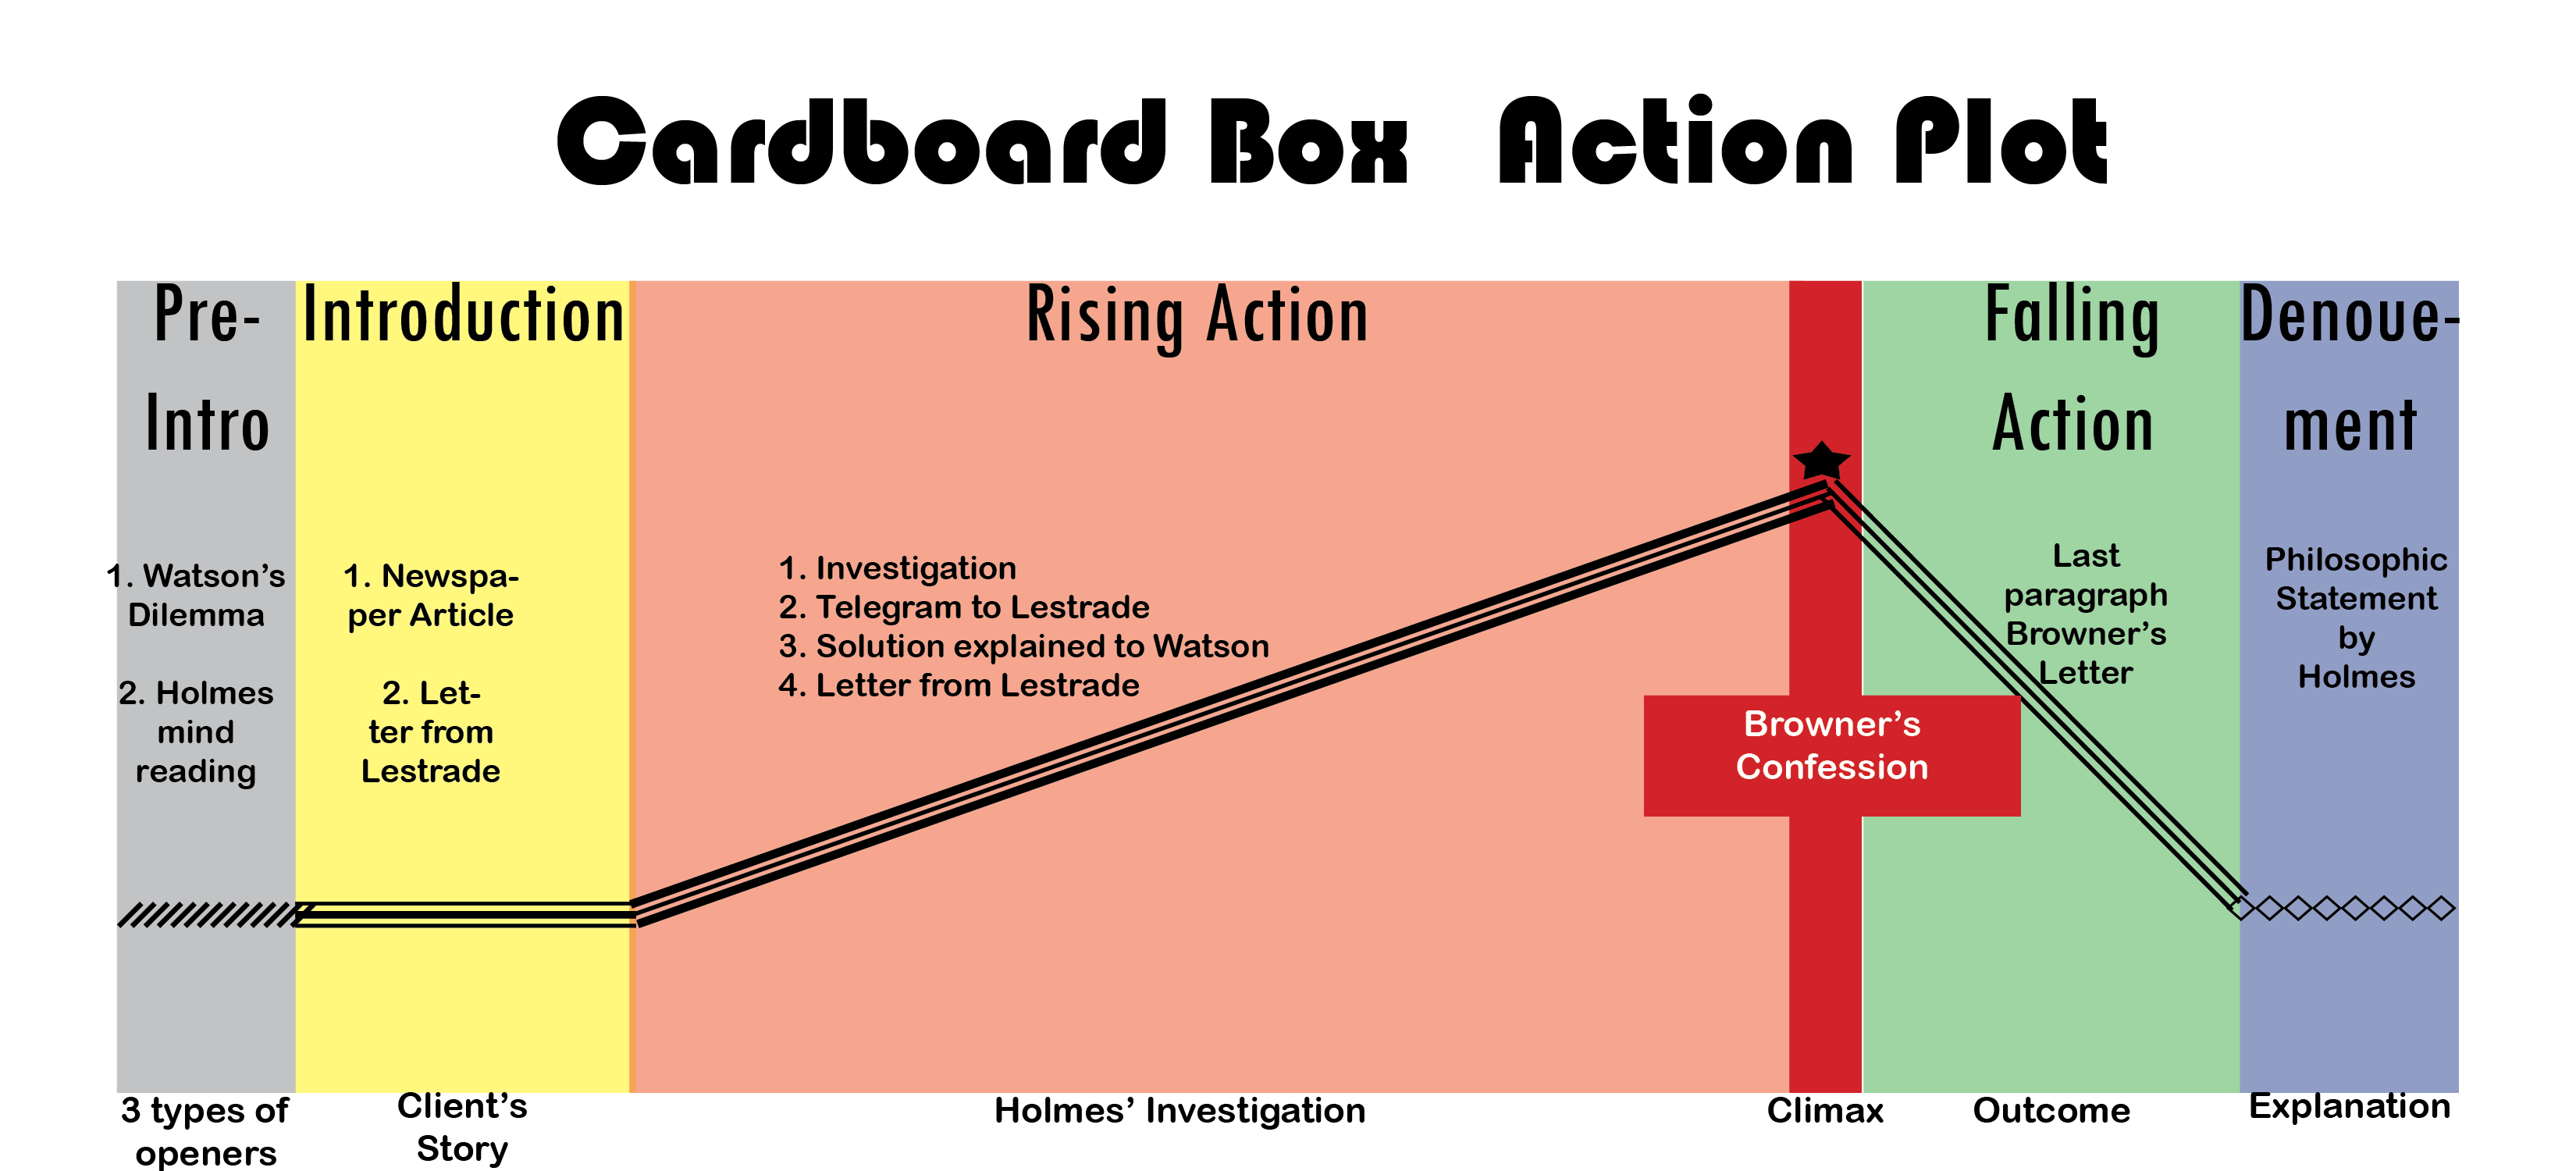 Adventure of the Cardboard Box Action Plot